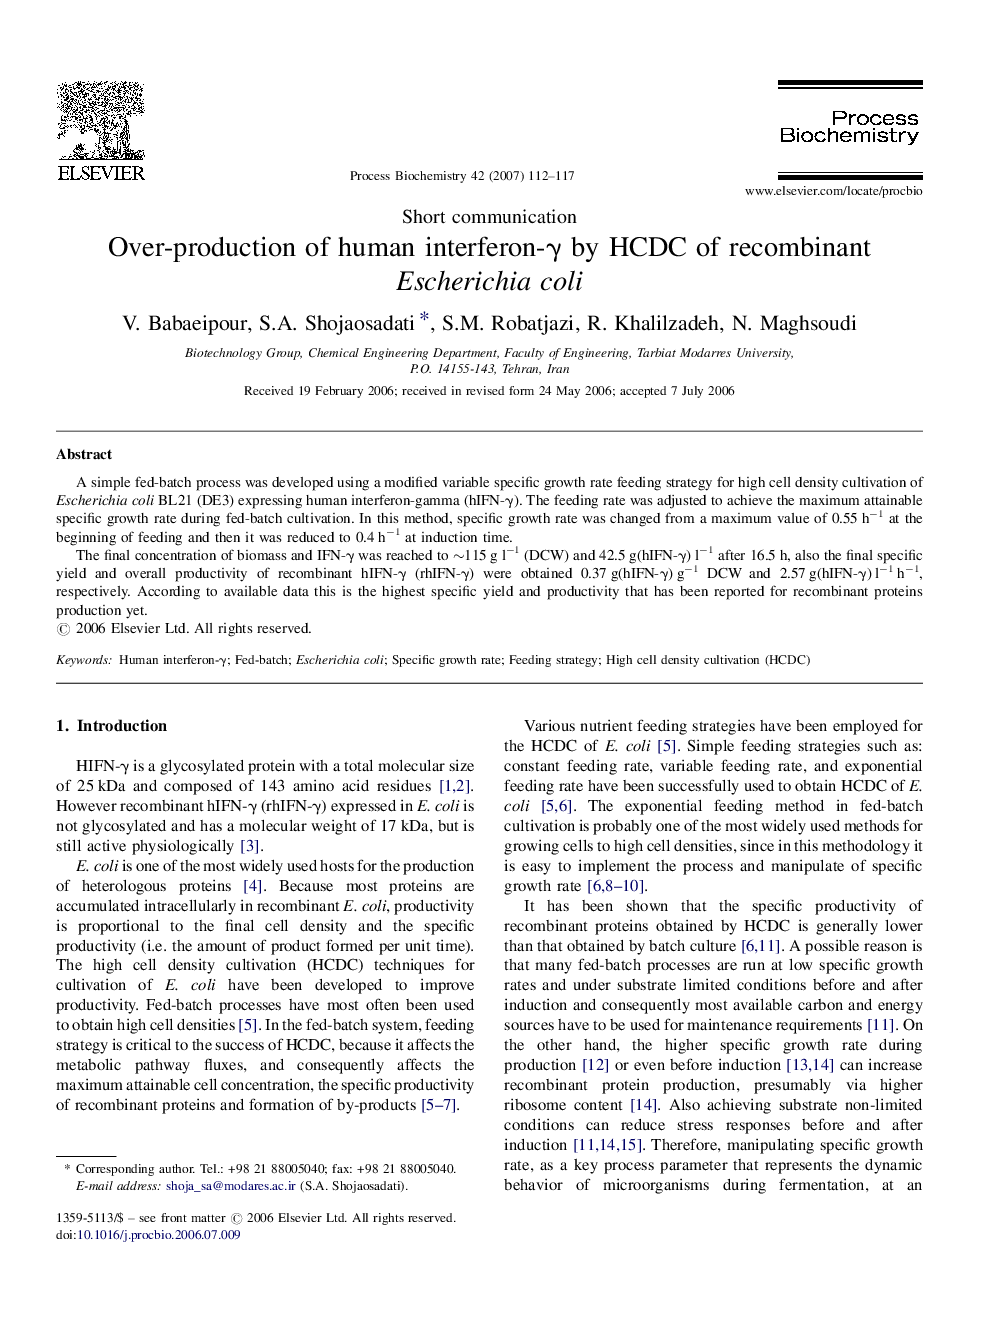 Over-production of human interferon-γ by HCDC of recombinant Escherichia coli